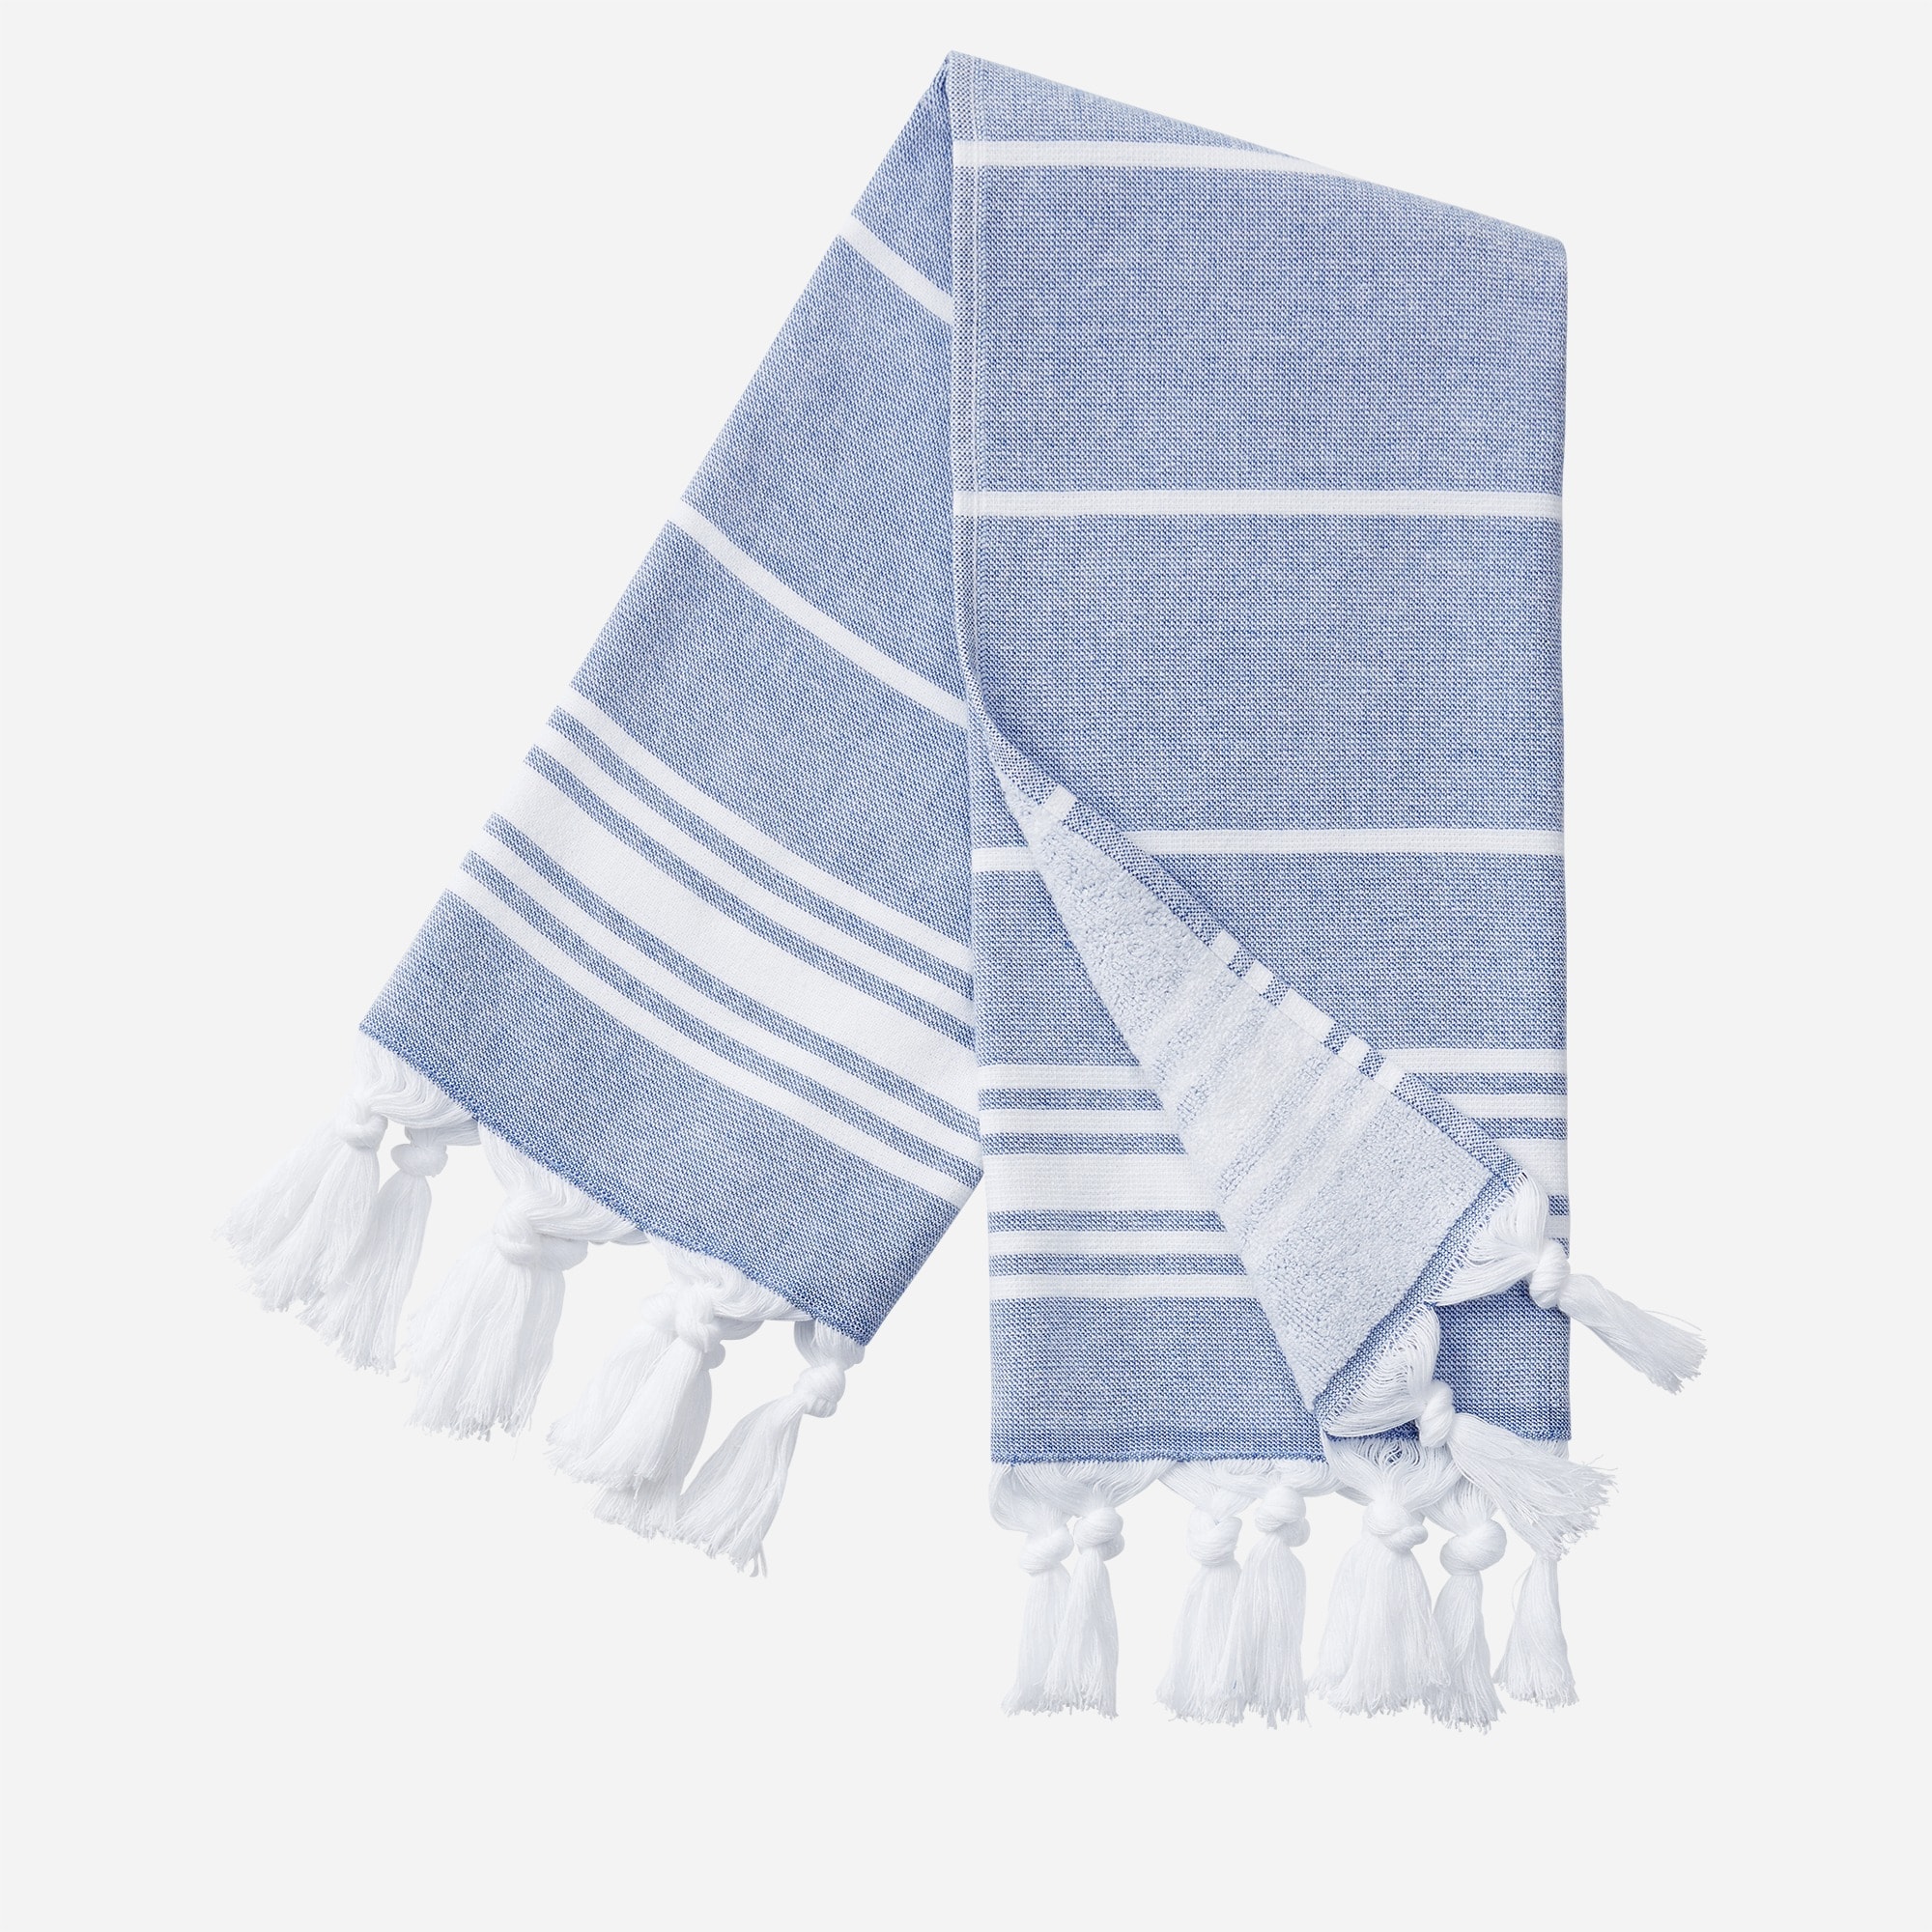 Jcrew Laguna Beach Textile Company Turkish cotton hand towel